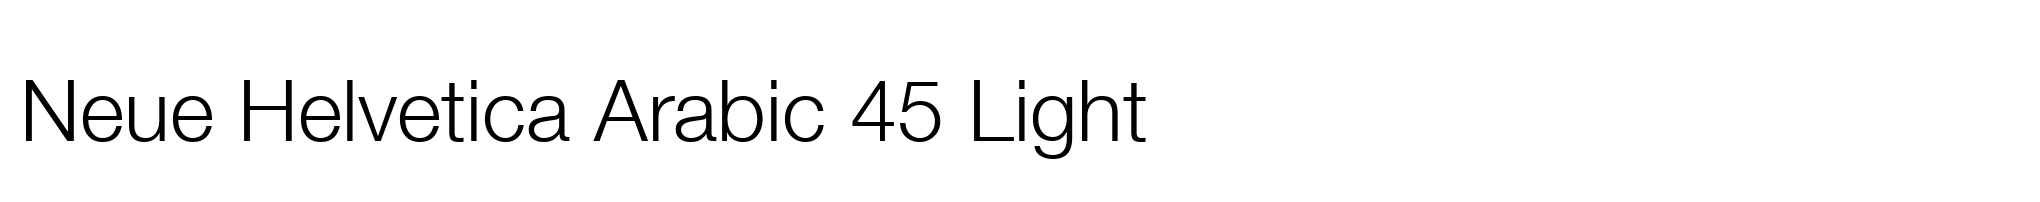 Neue Helvetica Arabic 45 Light image